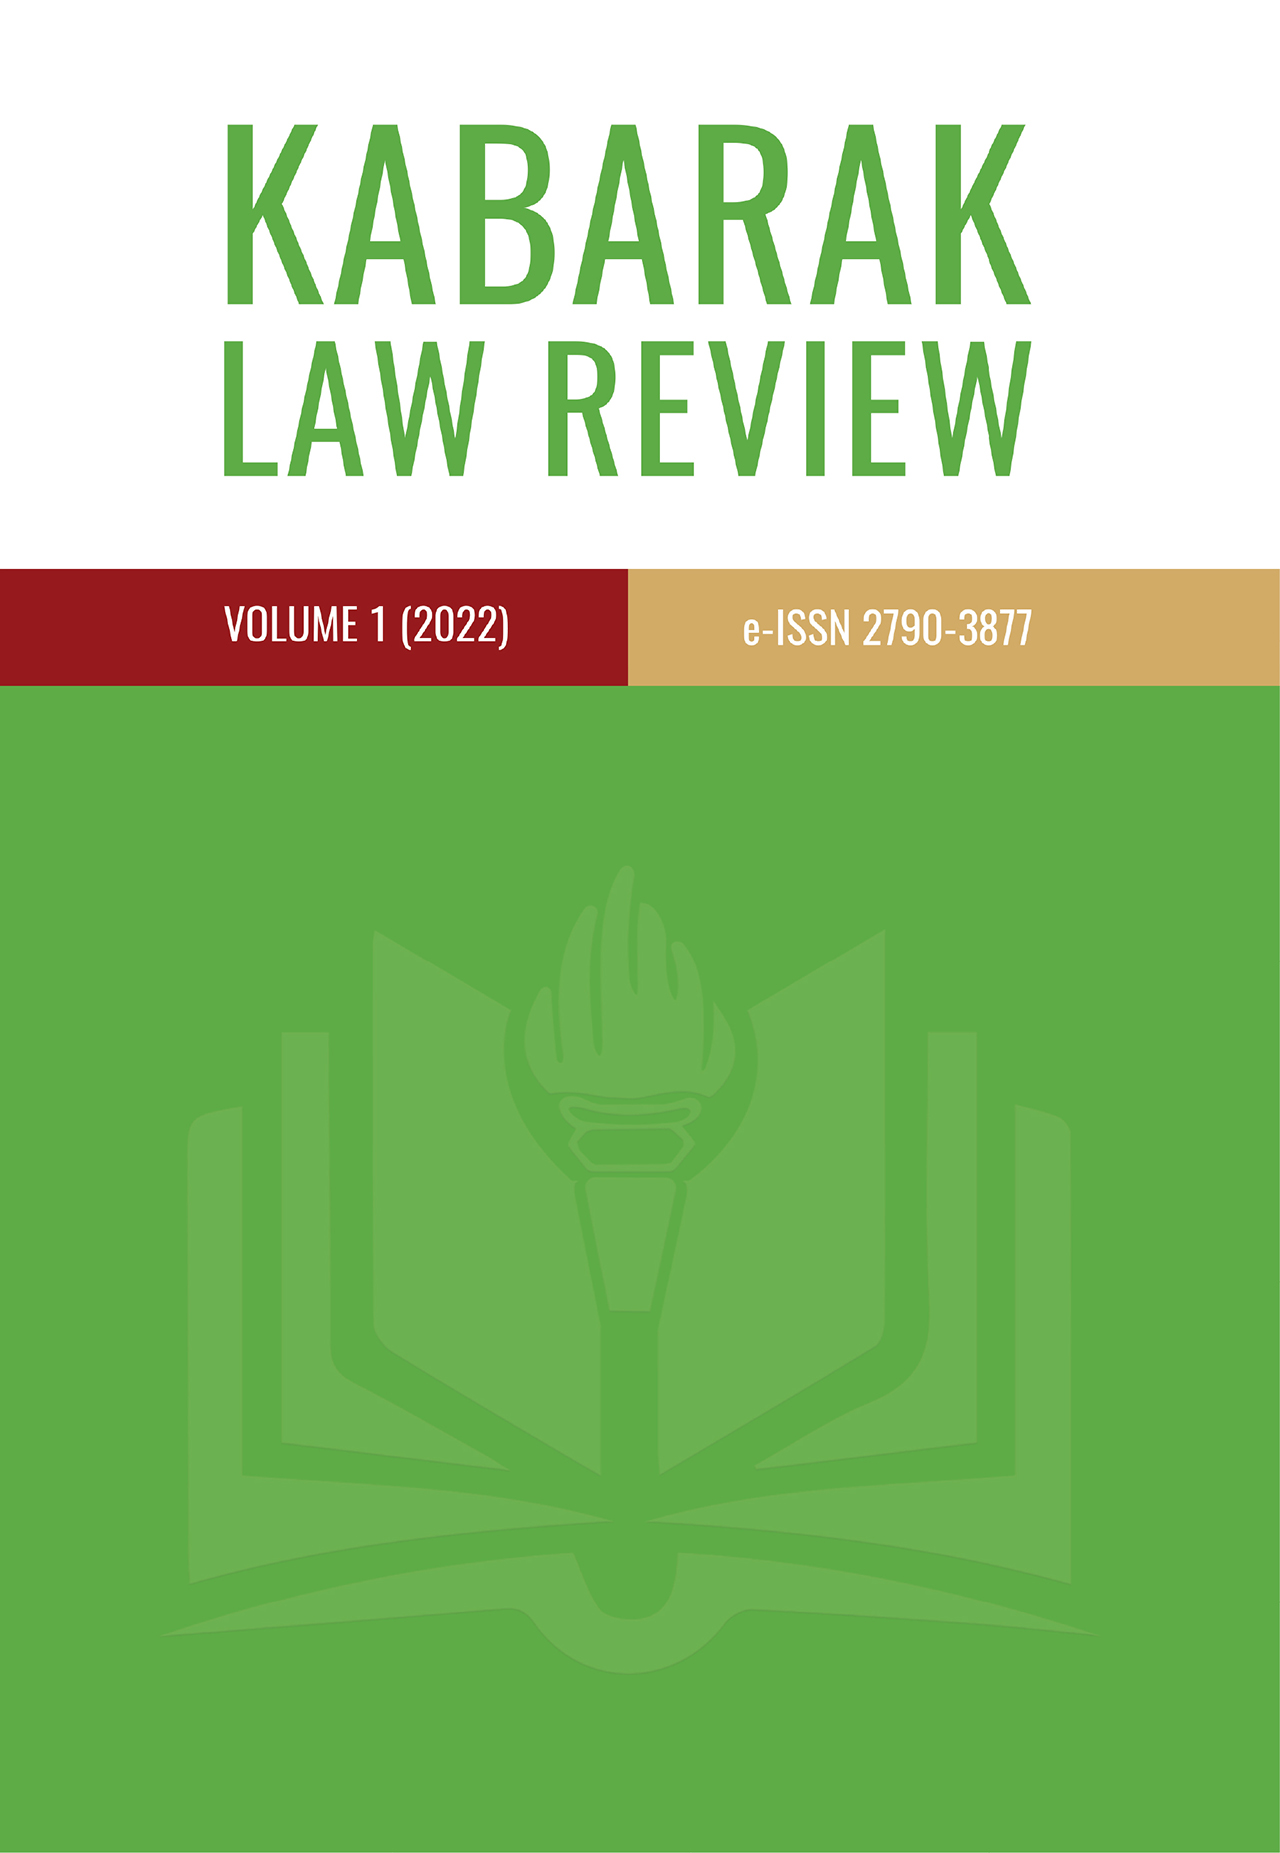 					View Vol. 1 (2022): Kabarak Law Review
				